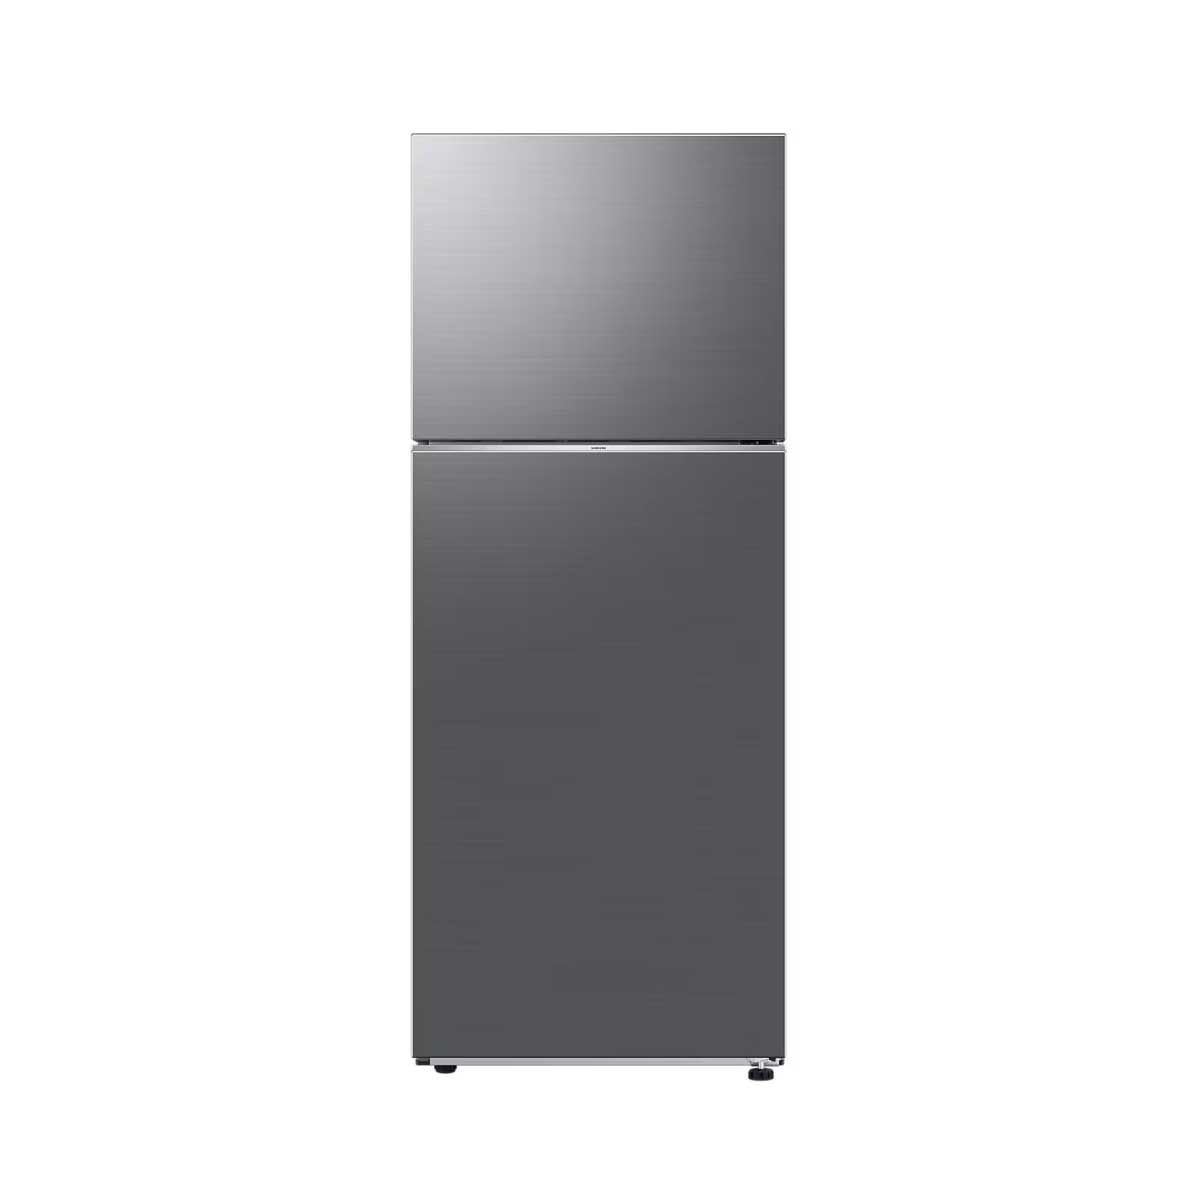 SAMSUNG ตู้เย็น 2 ประตู  พร้อมด้วย AI Energy Mode,Wifi  14.7 คิว, รุ่น RT42CG6644S9ST